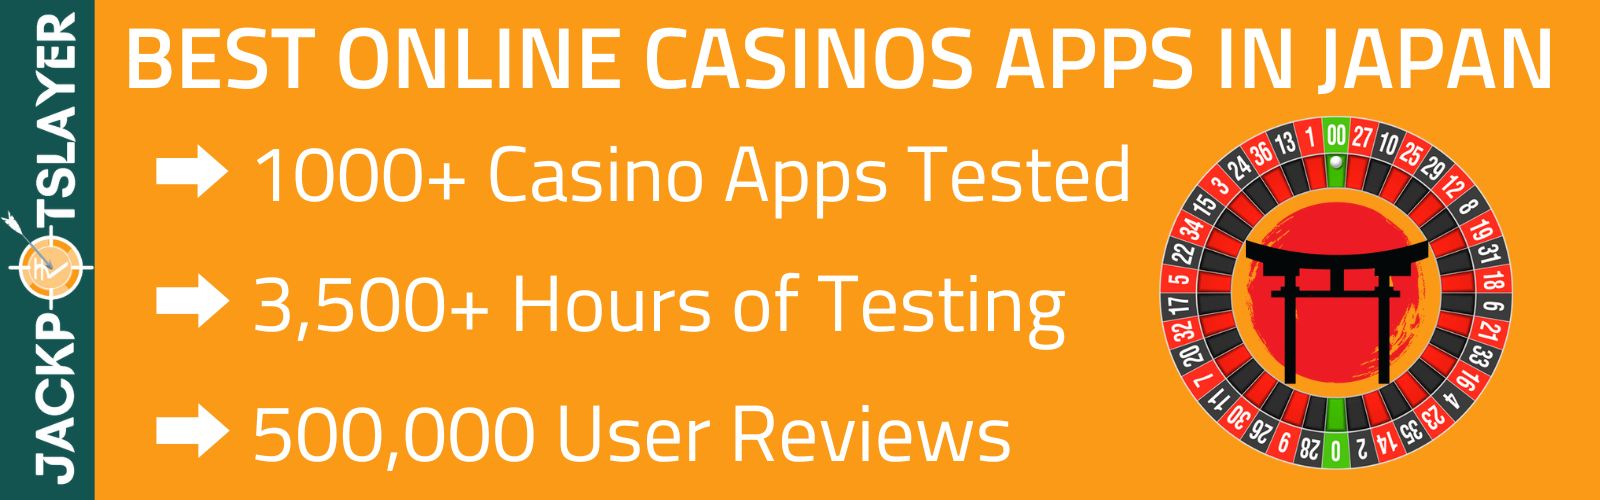 Best Online Casino Apps Japan